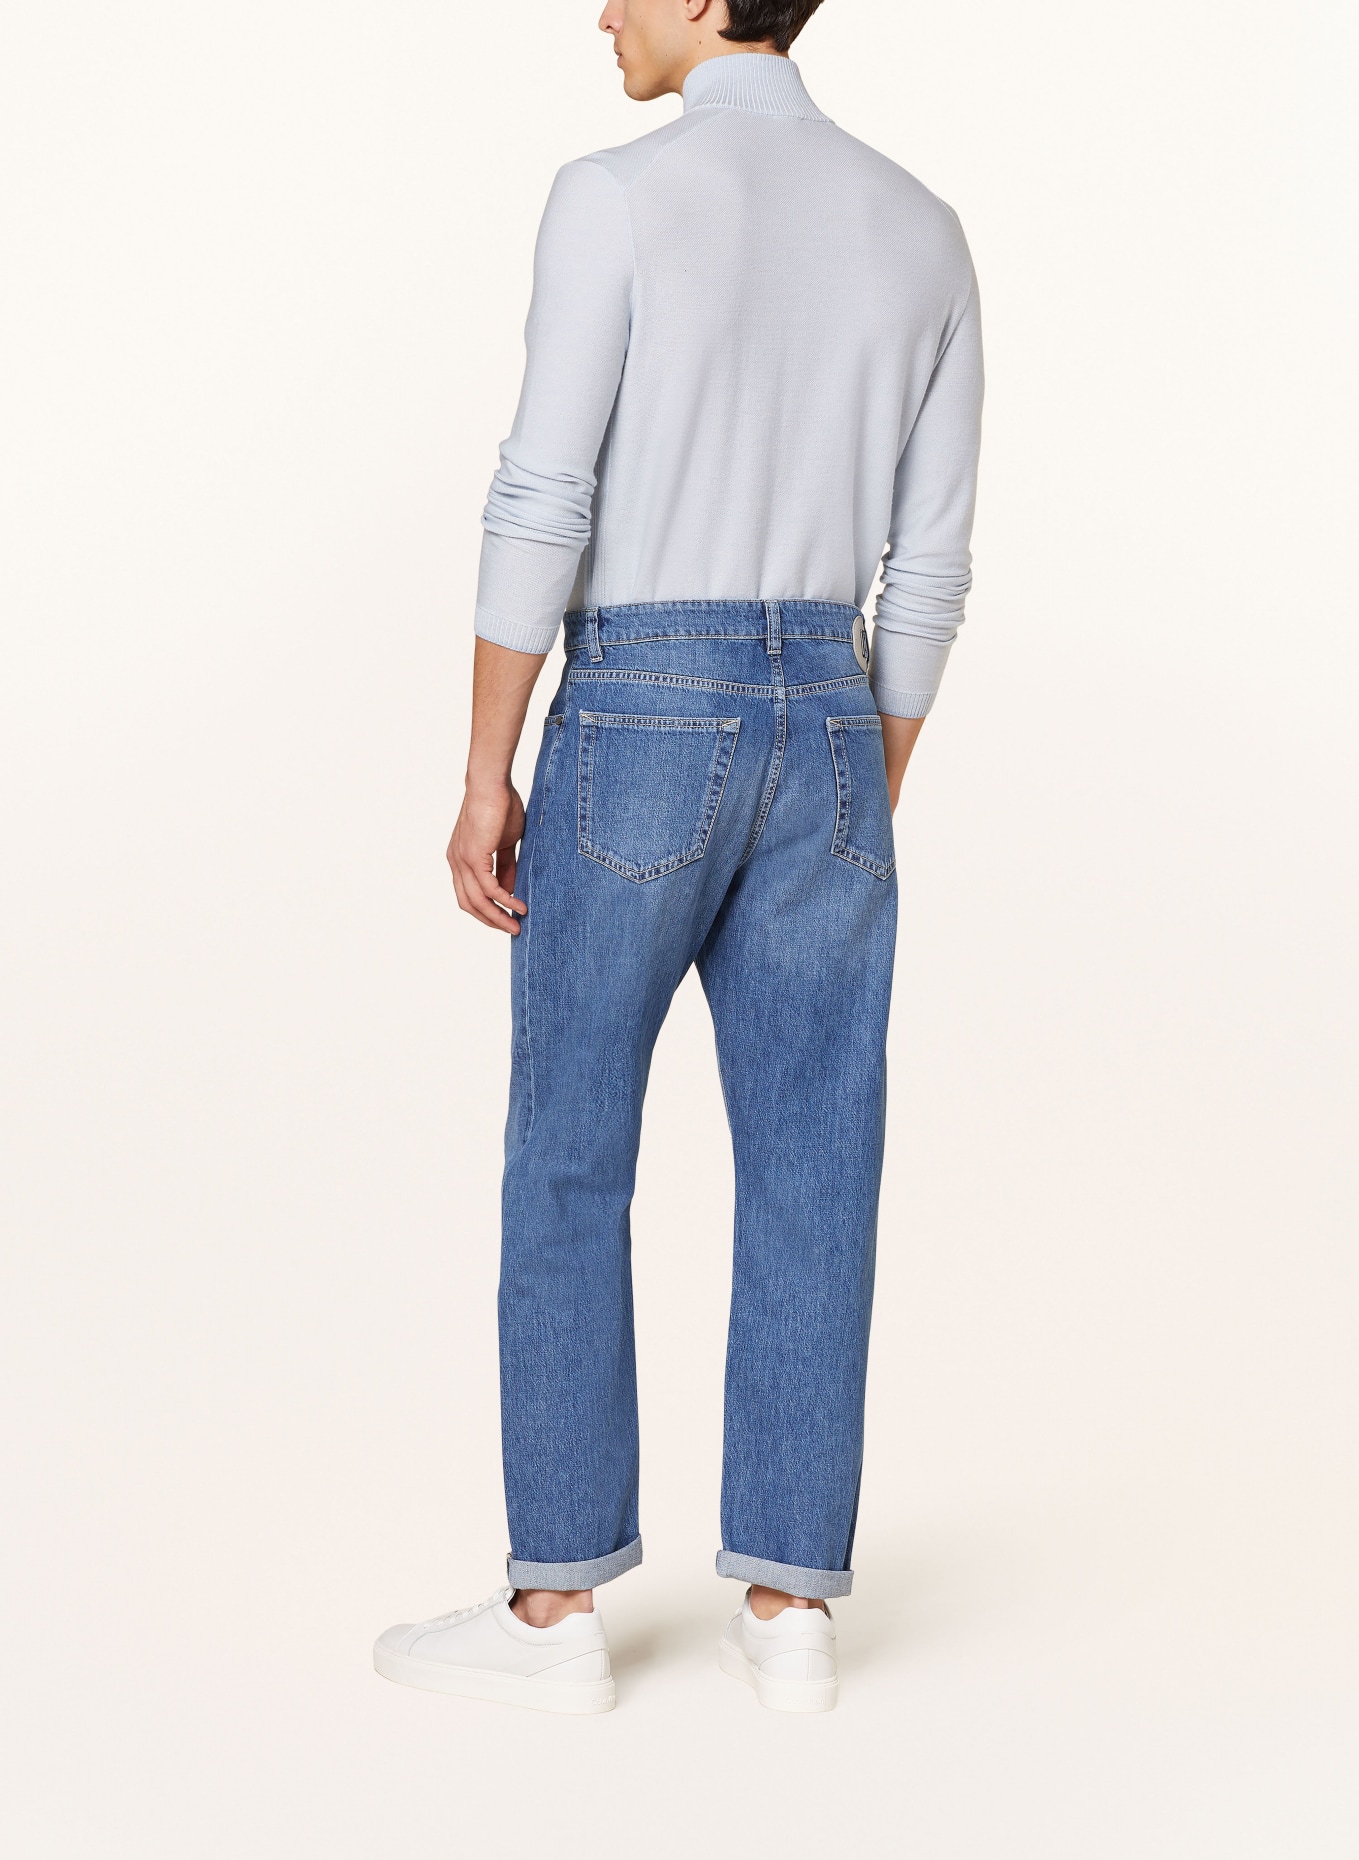 BOGNER Jeans BRIAN Tapered Fit, Farbe: 416 denim light (Bild 3)